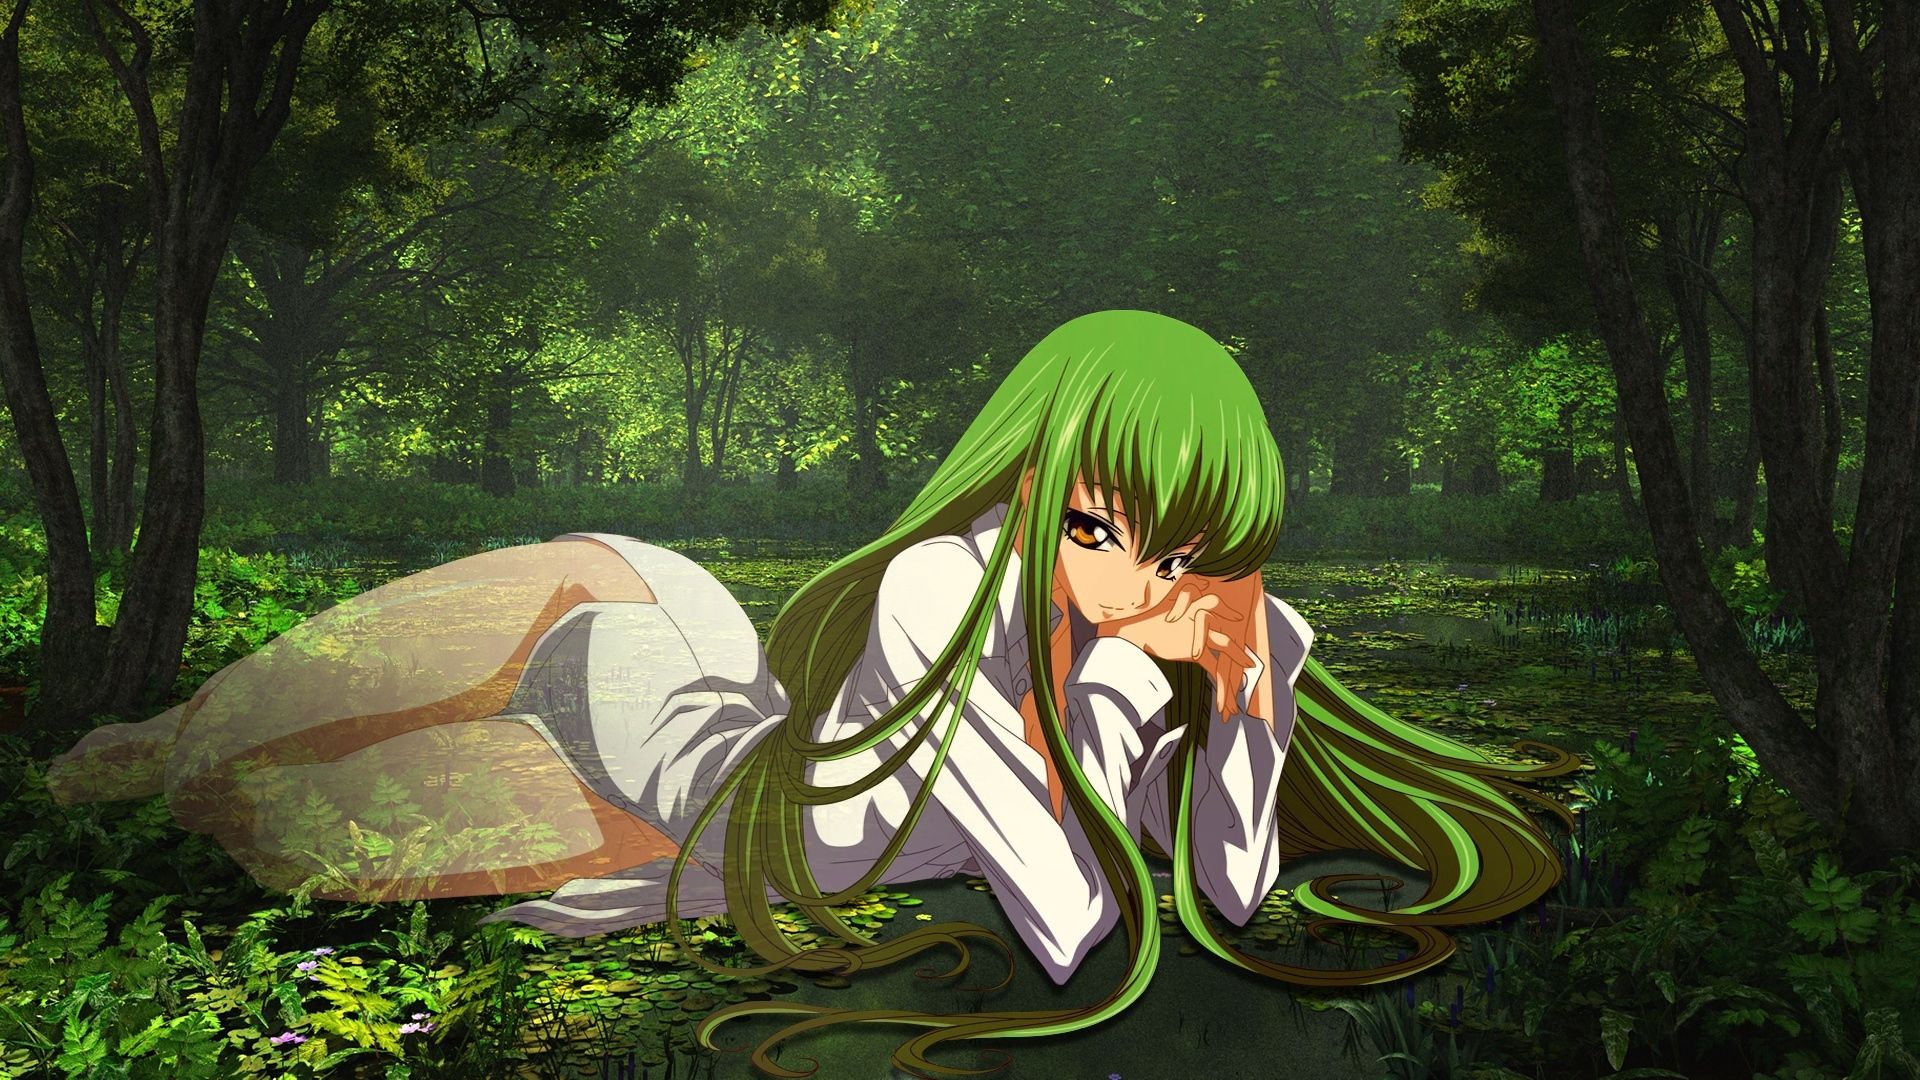 100 Green Anime Aesthetic Wallpapers  Wallpaperscom